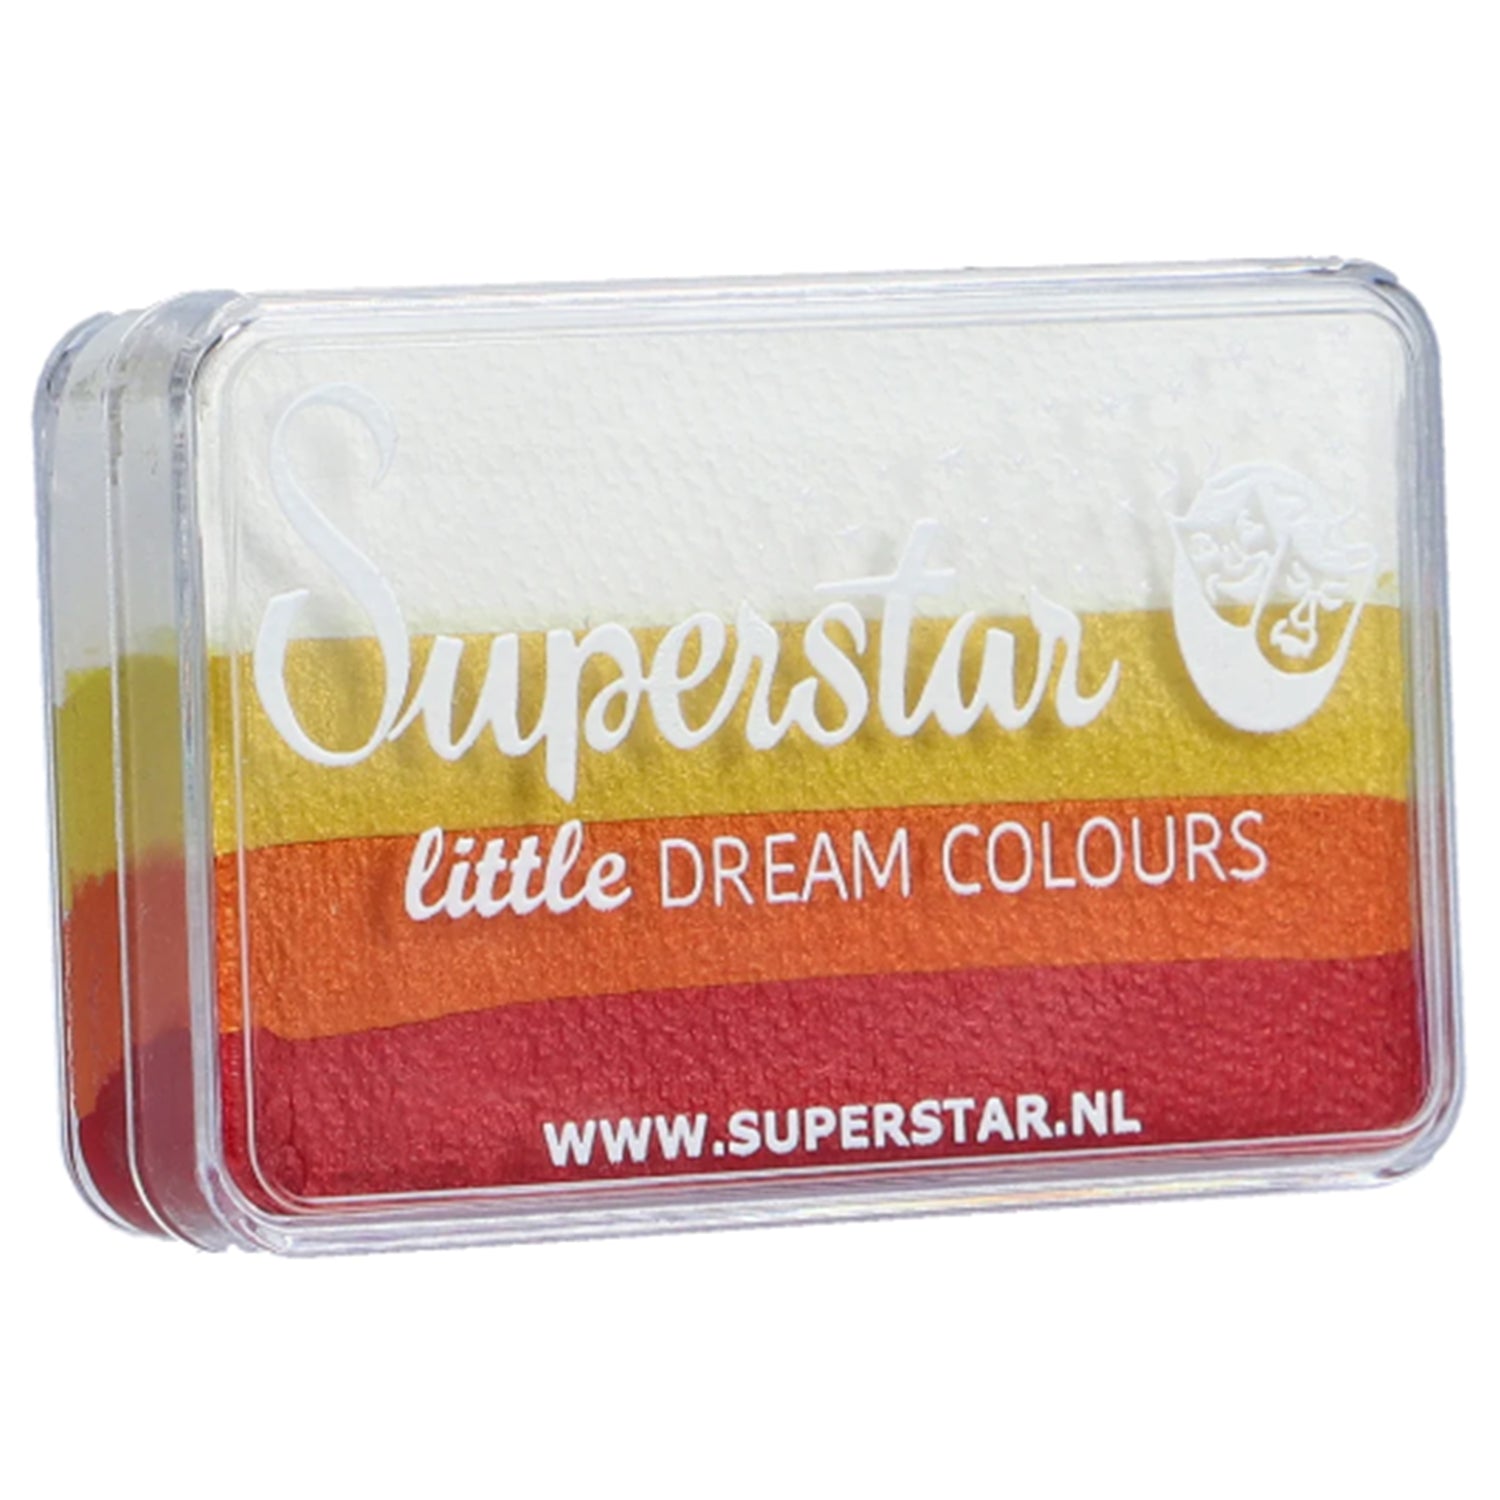 Superstar Little Dream Colours Rainbow Cake - Little Magic Sunrise (30 gm)